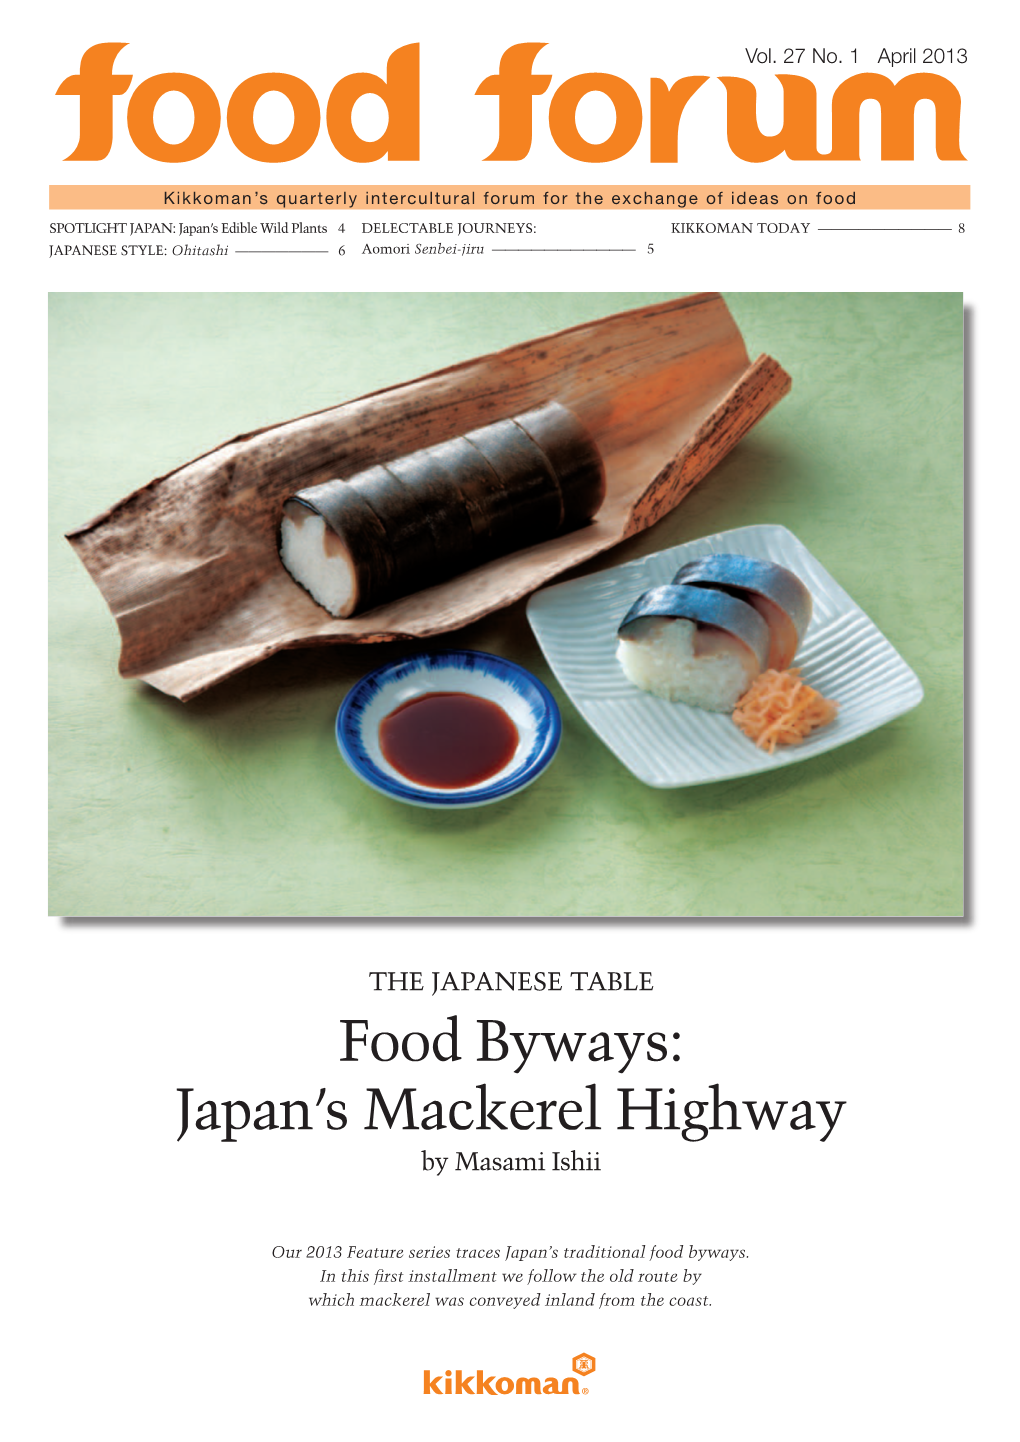 Food Byways: Japan's Mackerel Highway